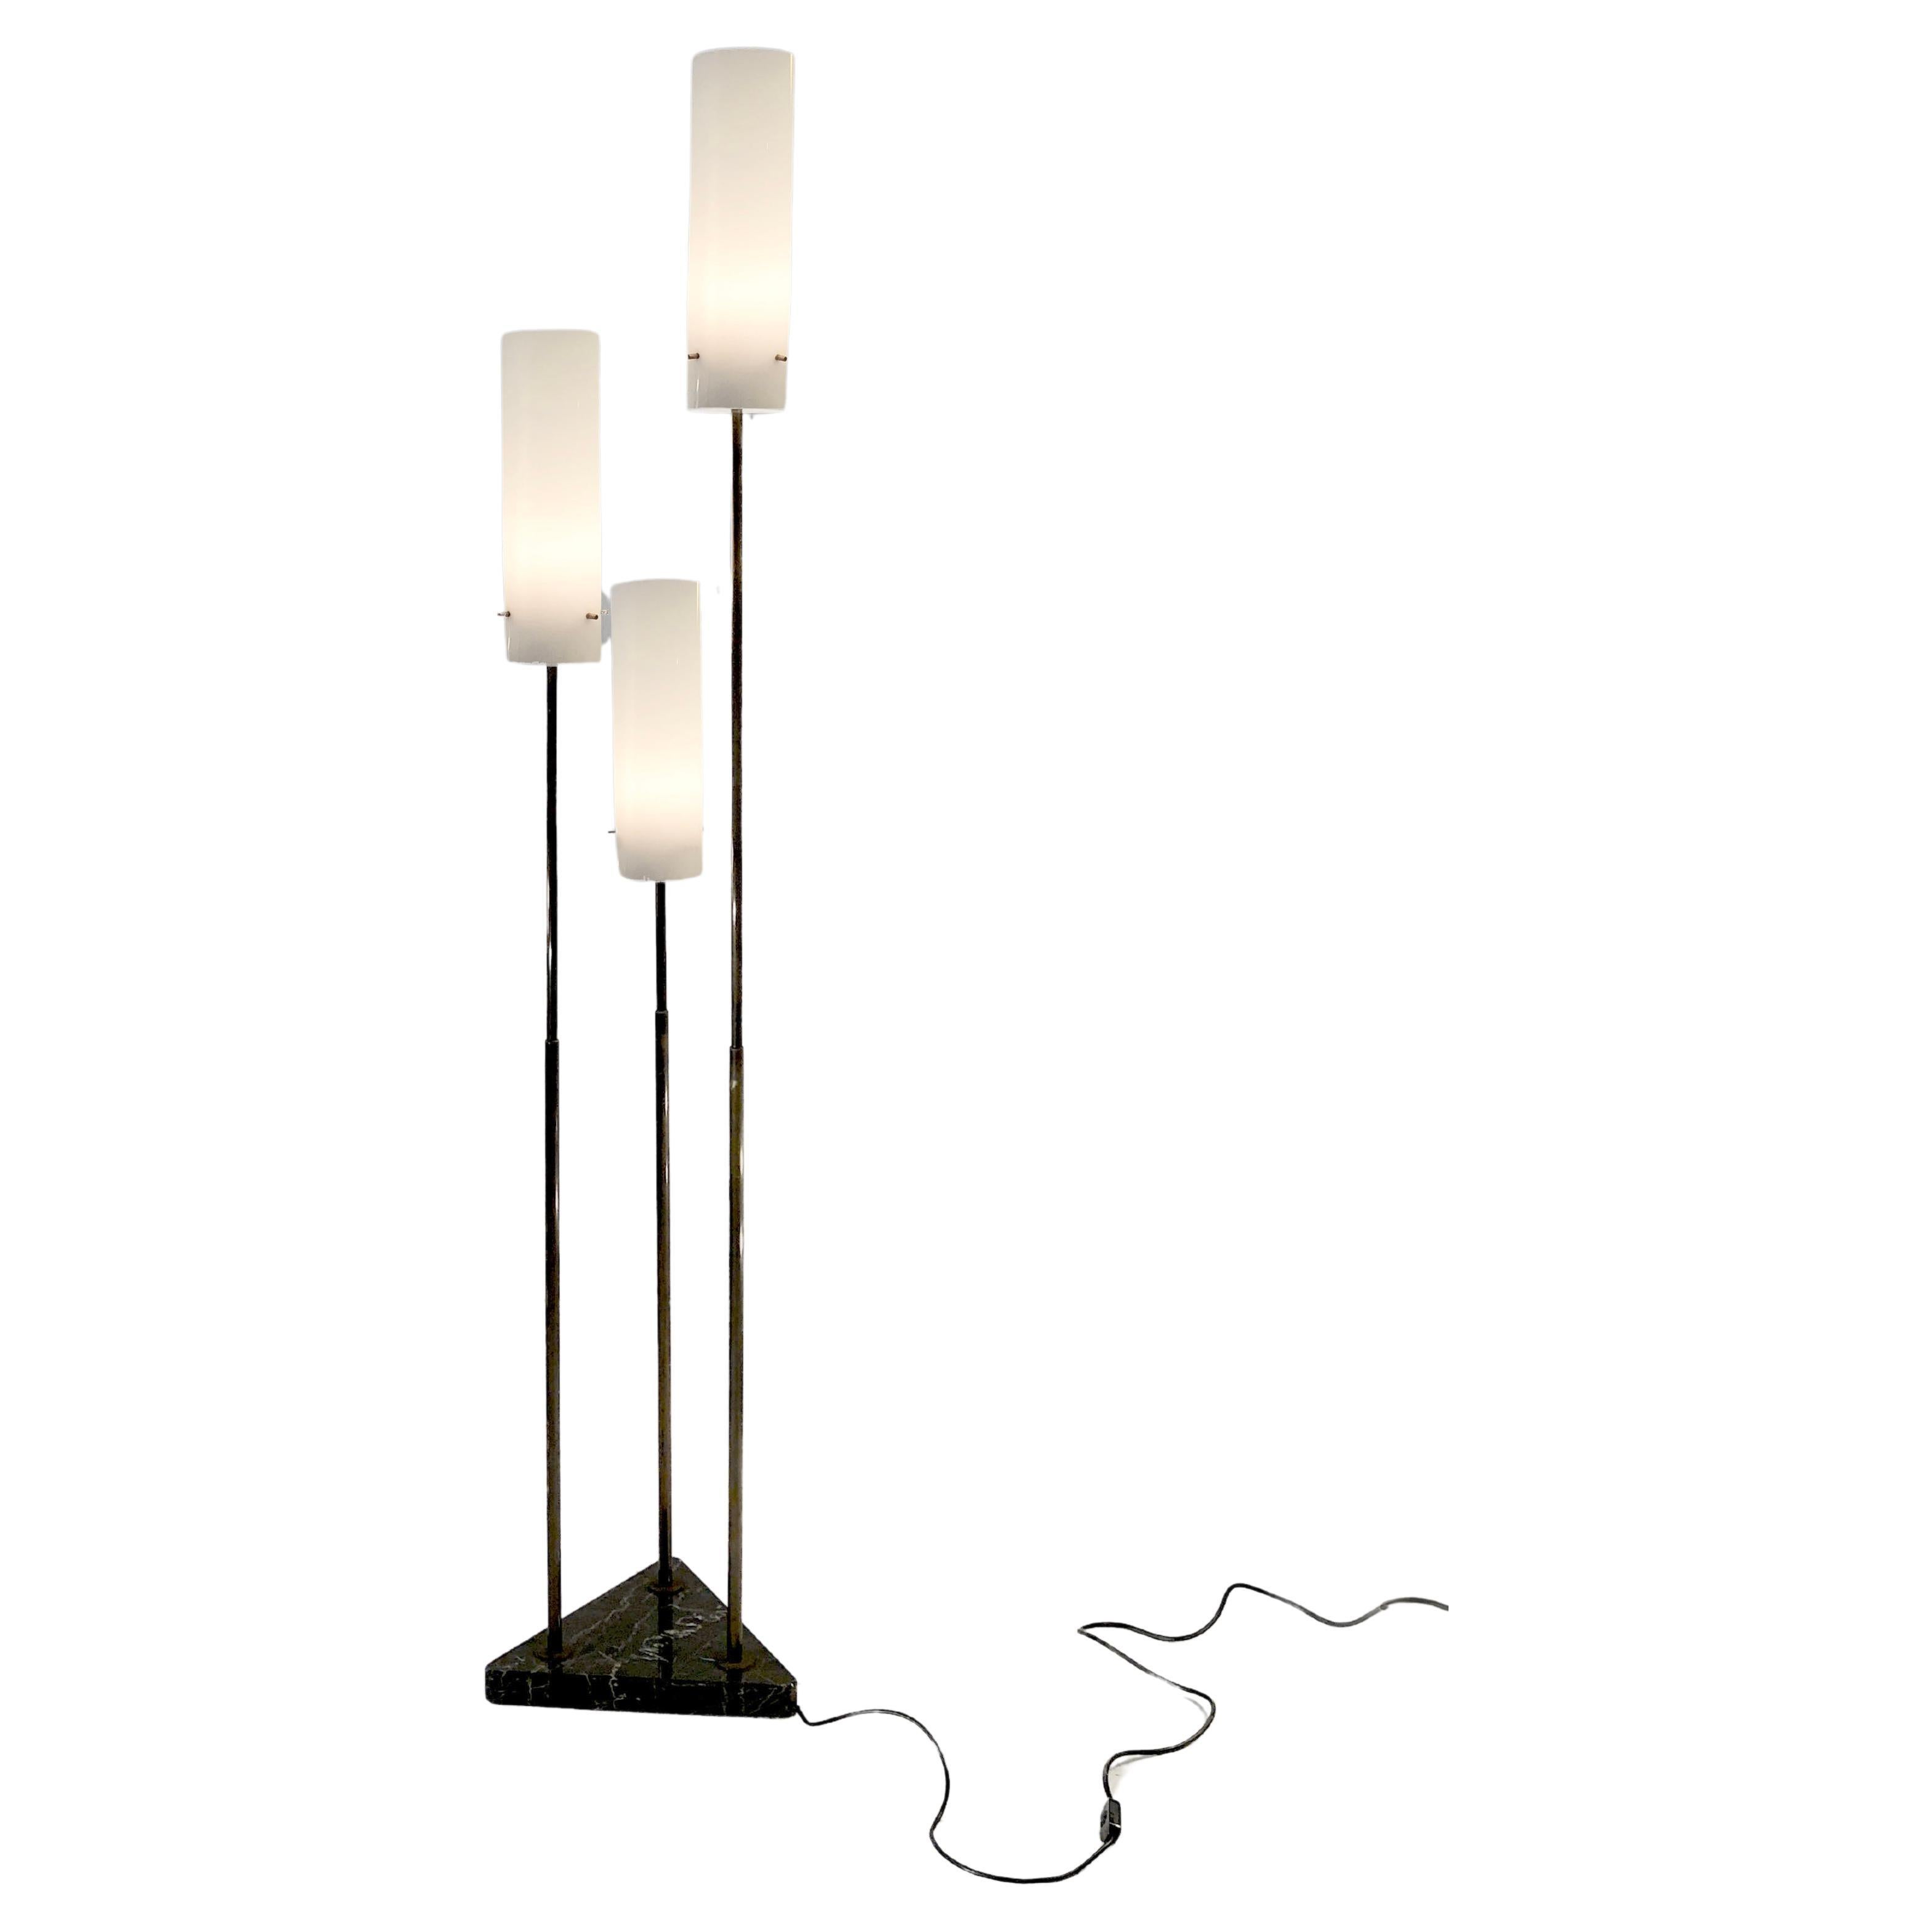 A MID-CENTURY-MODERN FLOOR LAMP in the style of TITO AGNOLI & OLUCE, Italy 1950